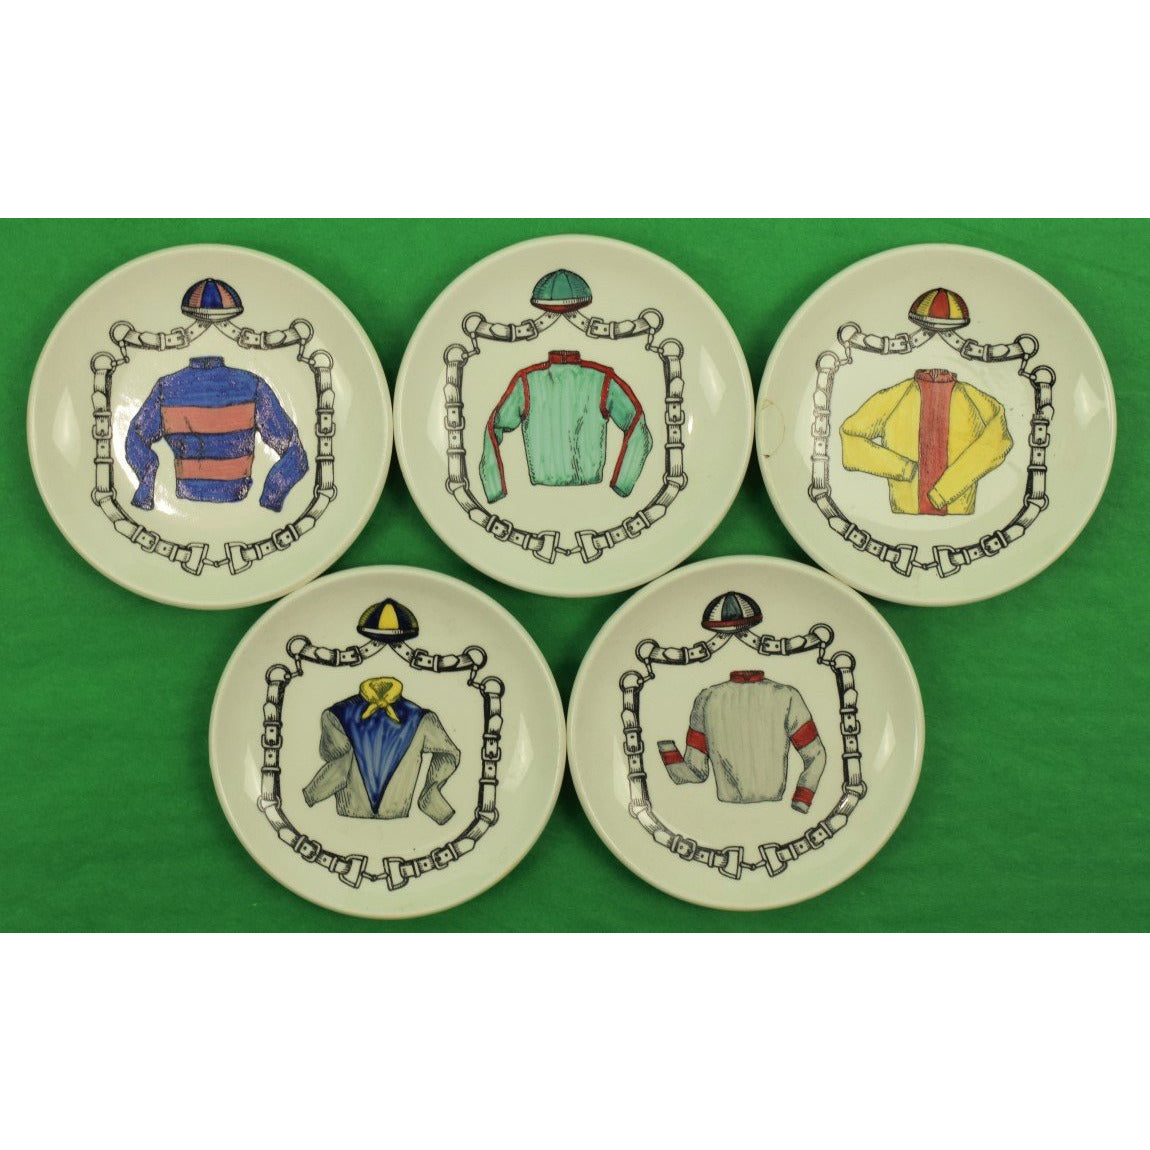 Set of 5 Jockey Ceramic Coasters by Galbiati Milano